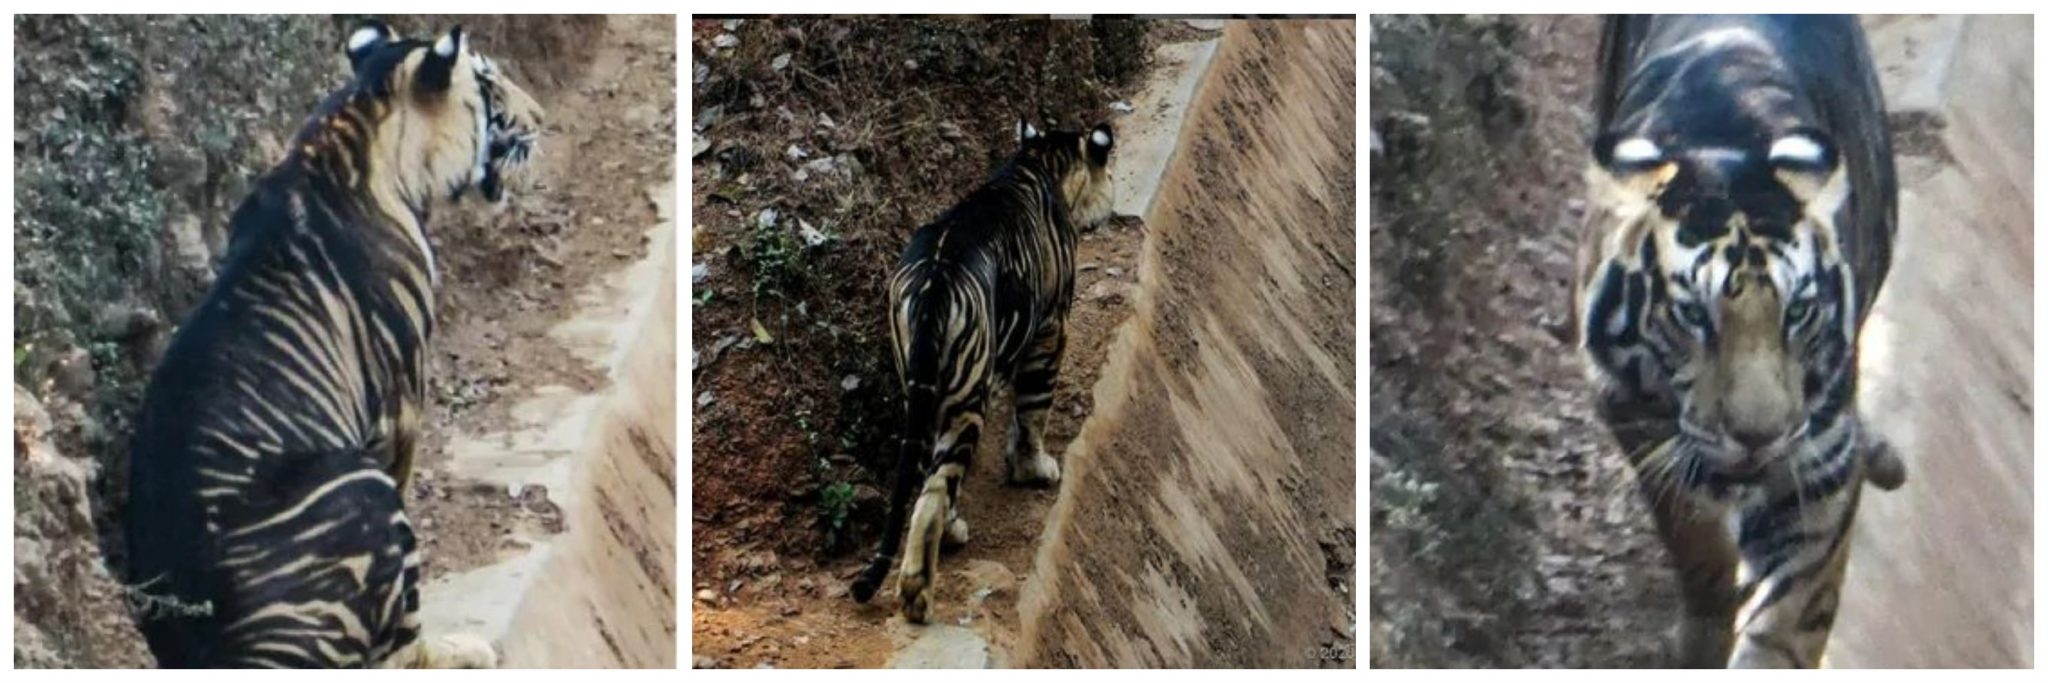 picture of black tiger taken by Soumen Bajpay